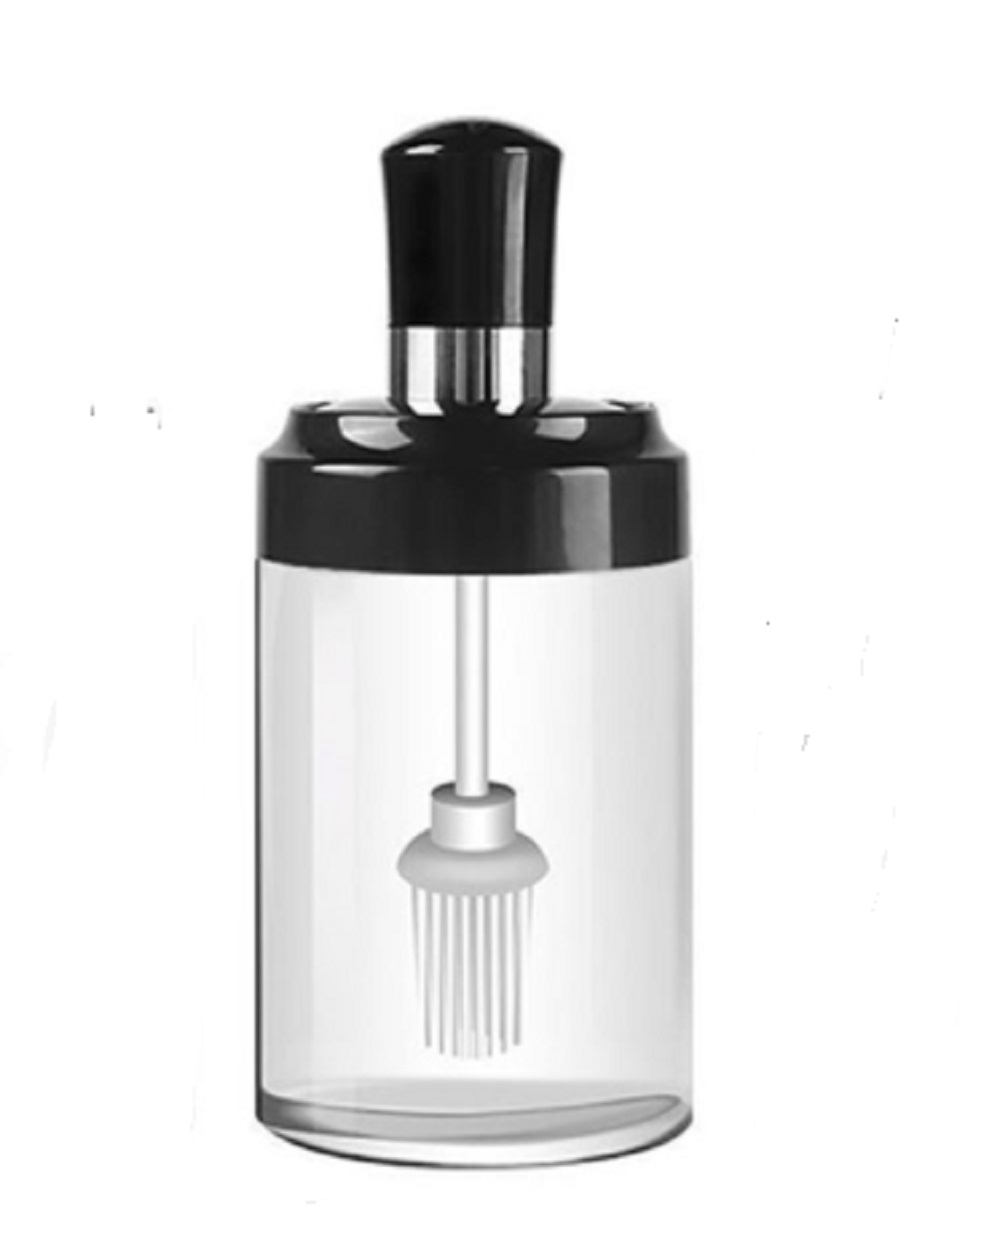 Glass Spice Jars Seasonning Box Seasoning Container Dispenser Bottle Jar Oil Dispenser Combination Brush and Lid Design Empty Jars - image 1 of 5